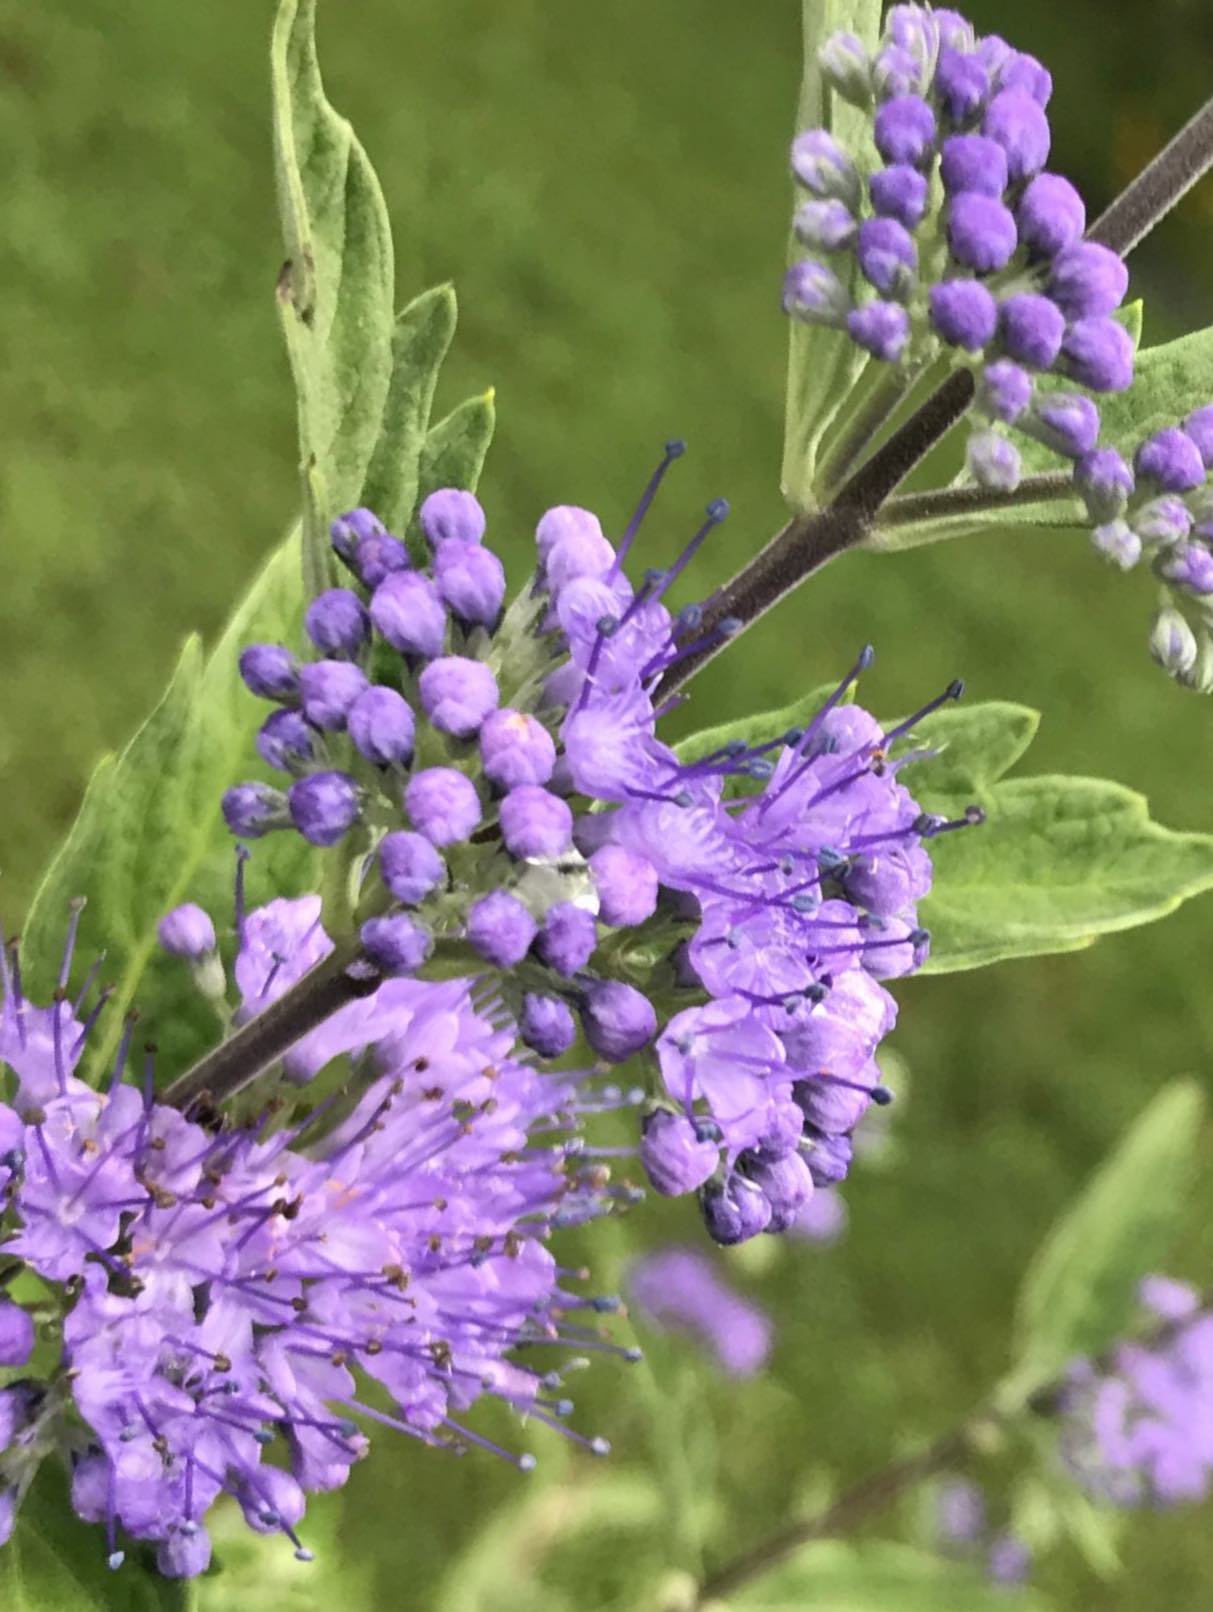 purple flowers are healing